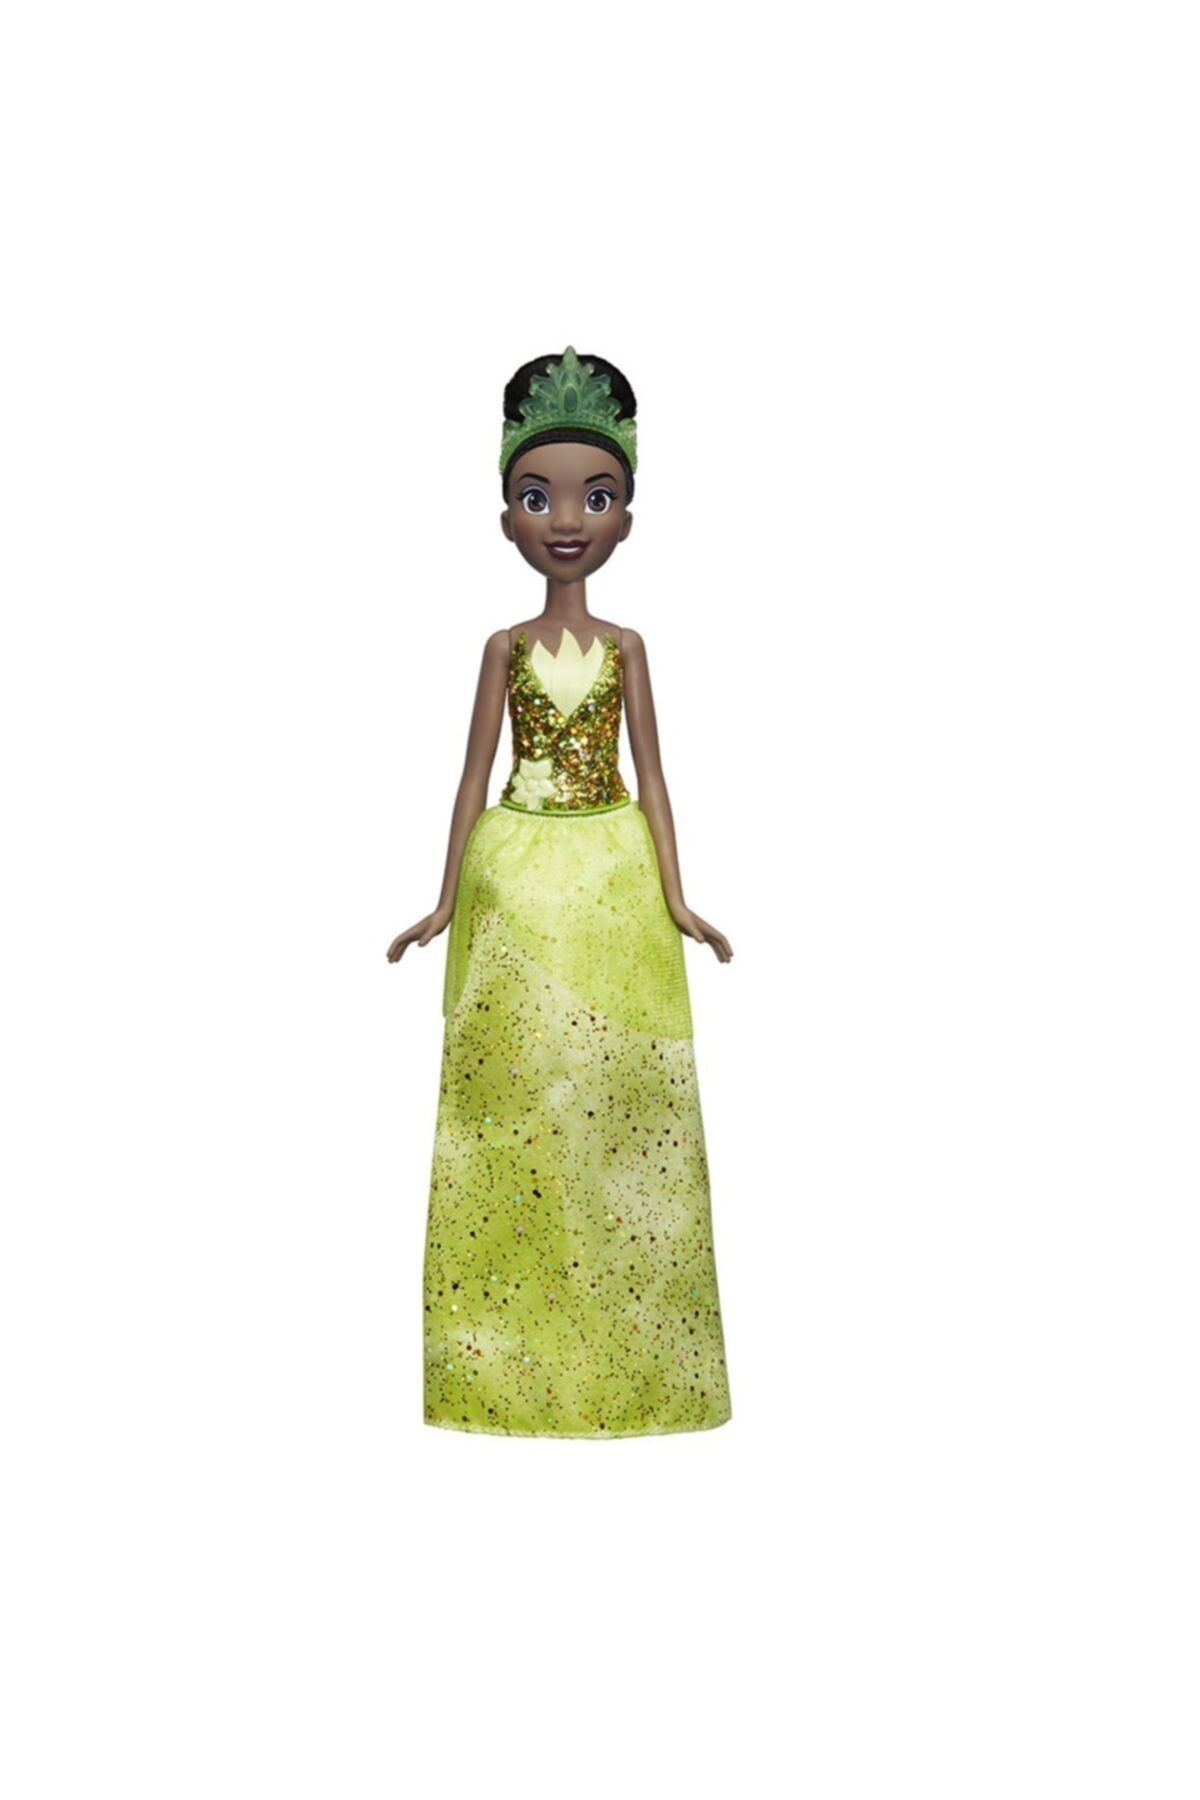 Hasbro Disney Prenses Işıltılı Prensesler Seri 2 Tiana - E4021-e4162